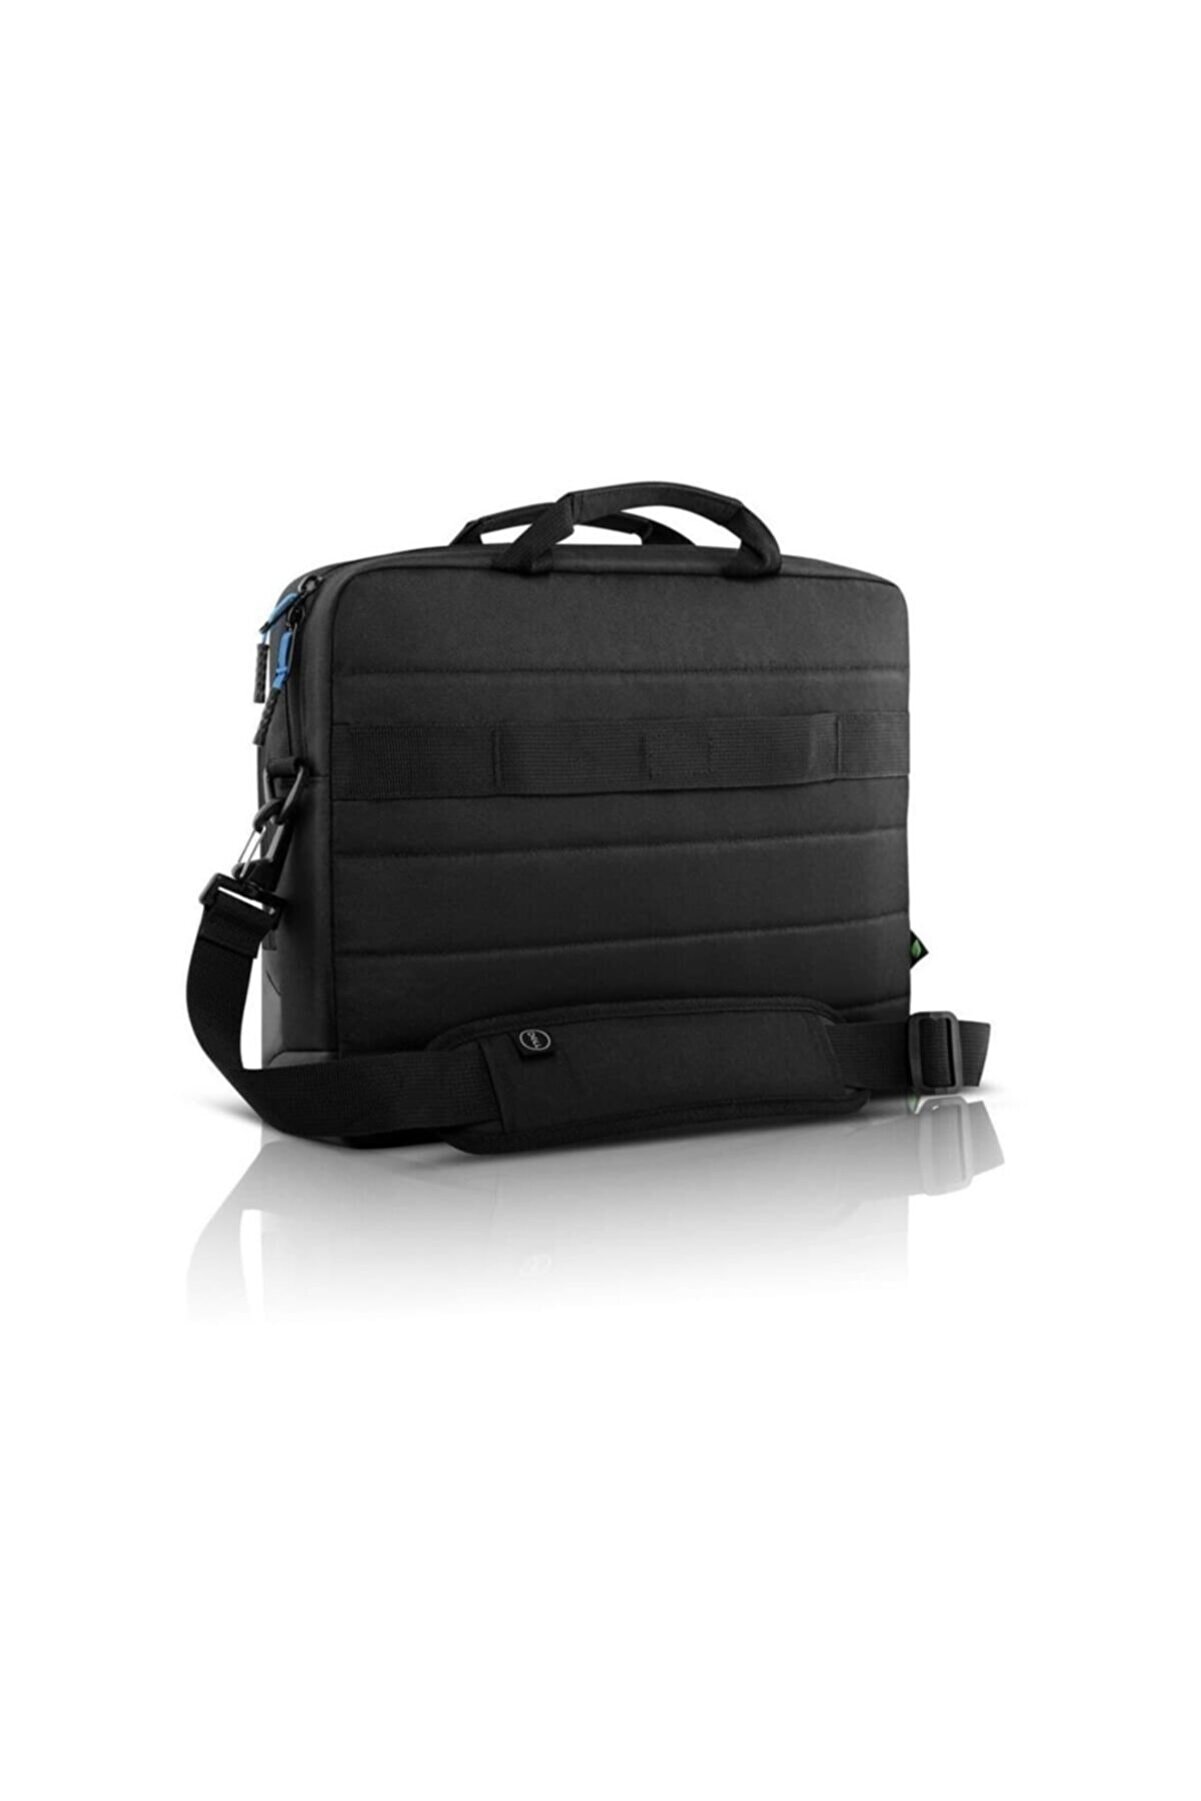 Dell Pro Slim Briefcase 15 inç Bilgisayar Çantası Siyah 460-BCMK